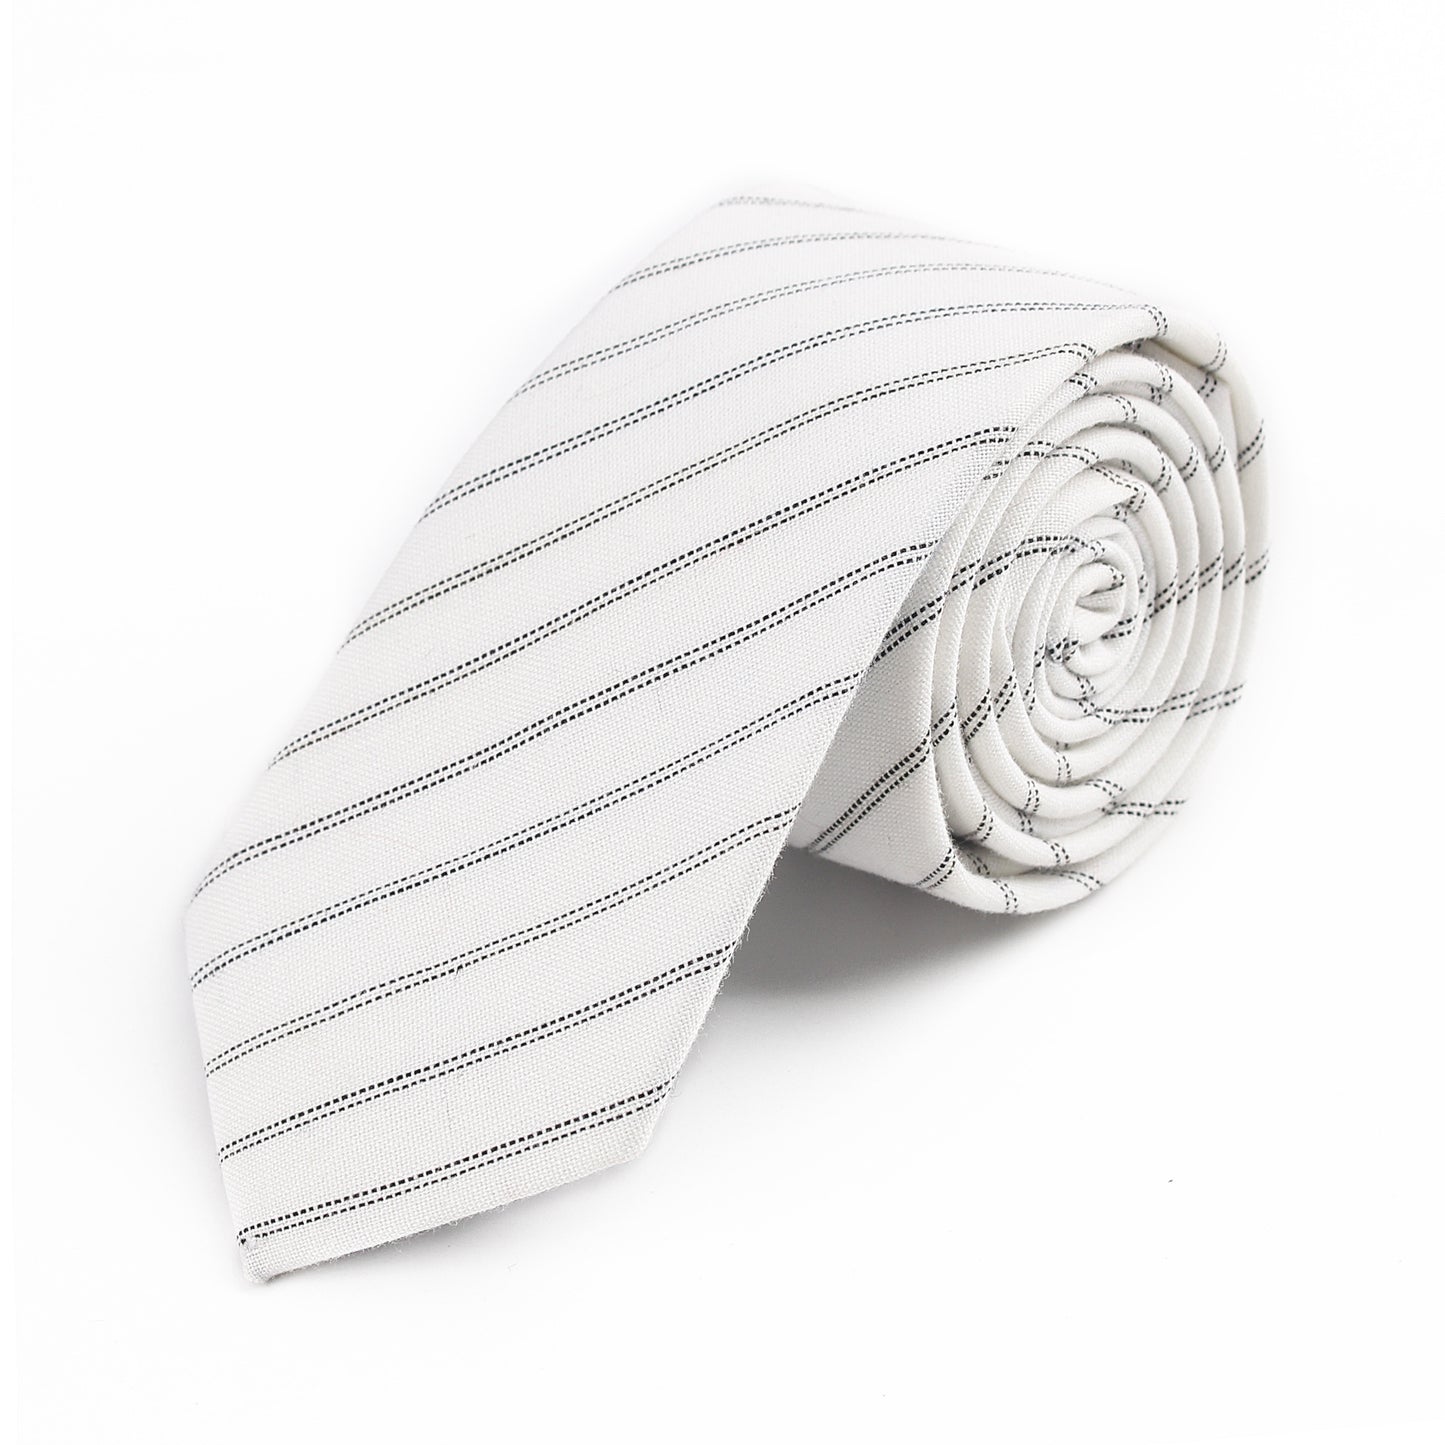 Men's Casual Business Cotton Striped Tie